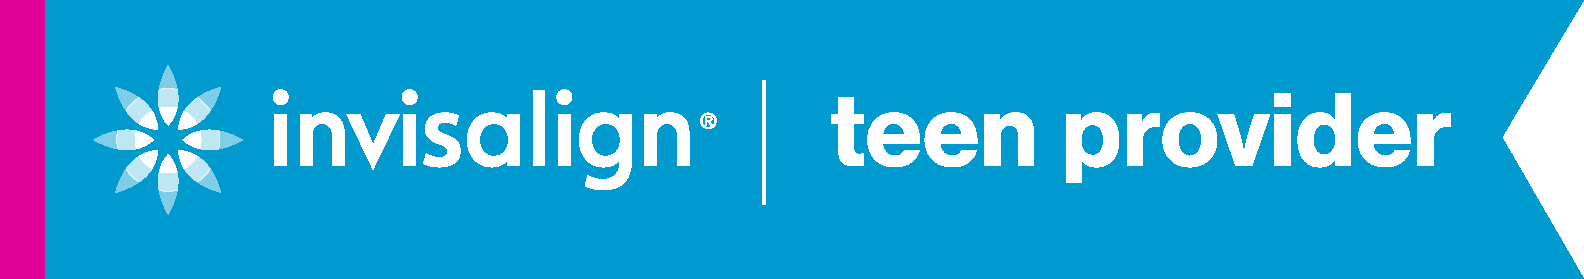 Invisalign Teen logo